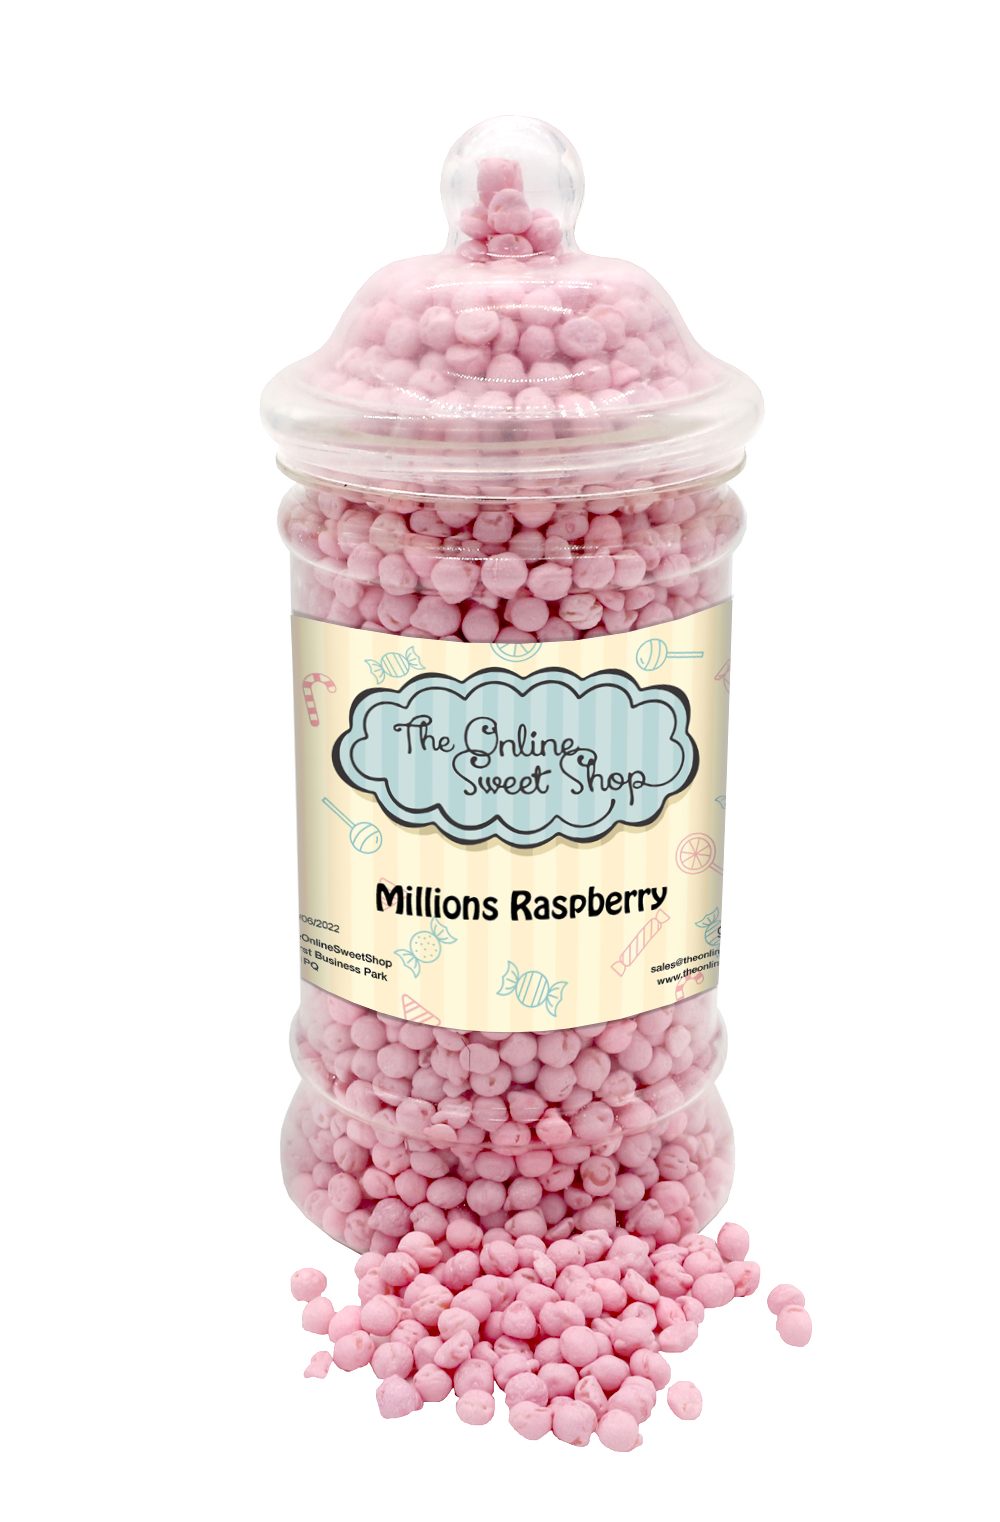 Millions Raspberry Sweets Jar